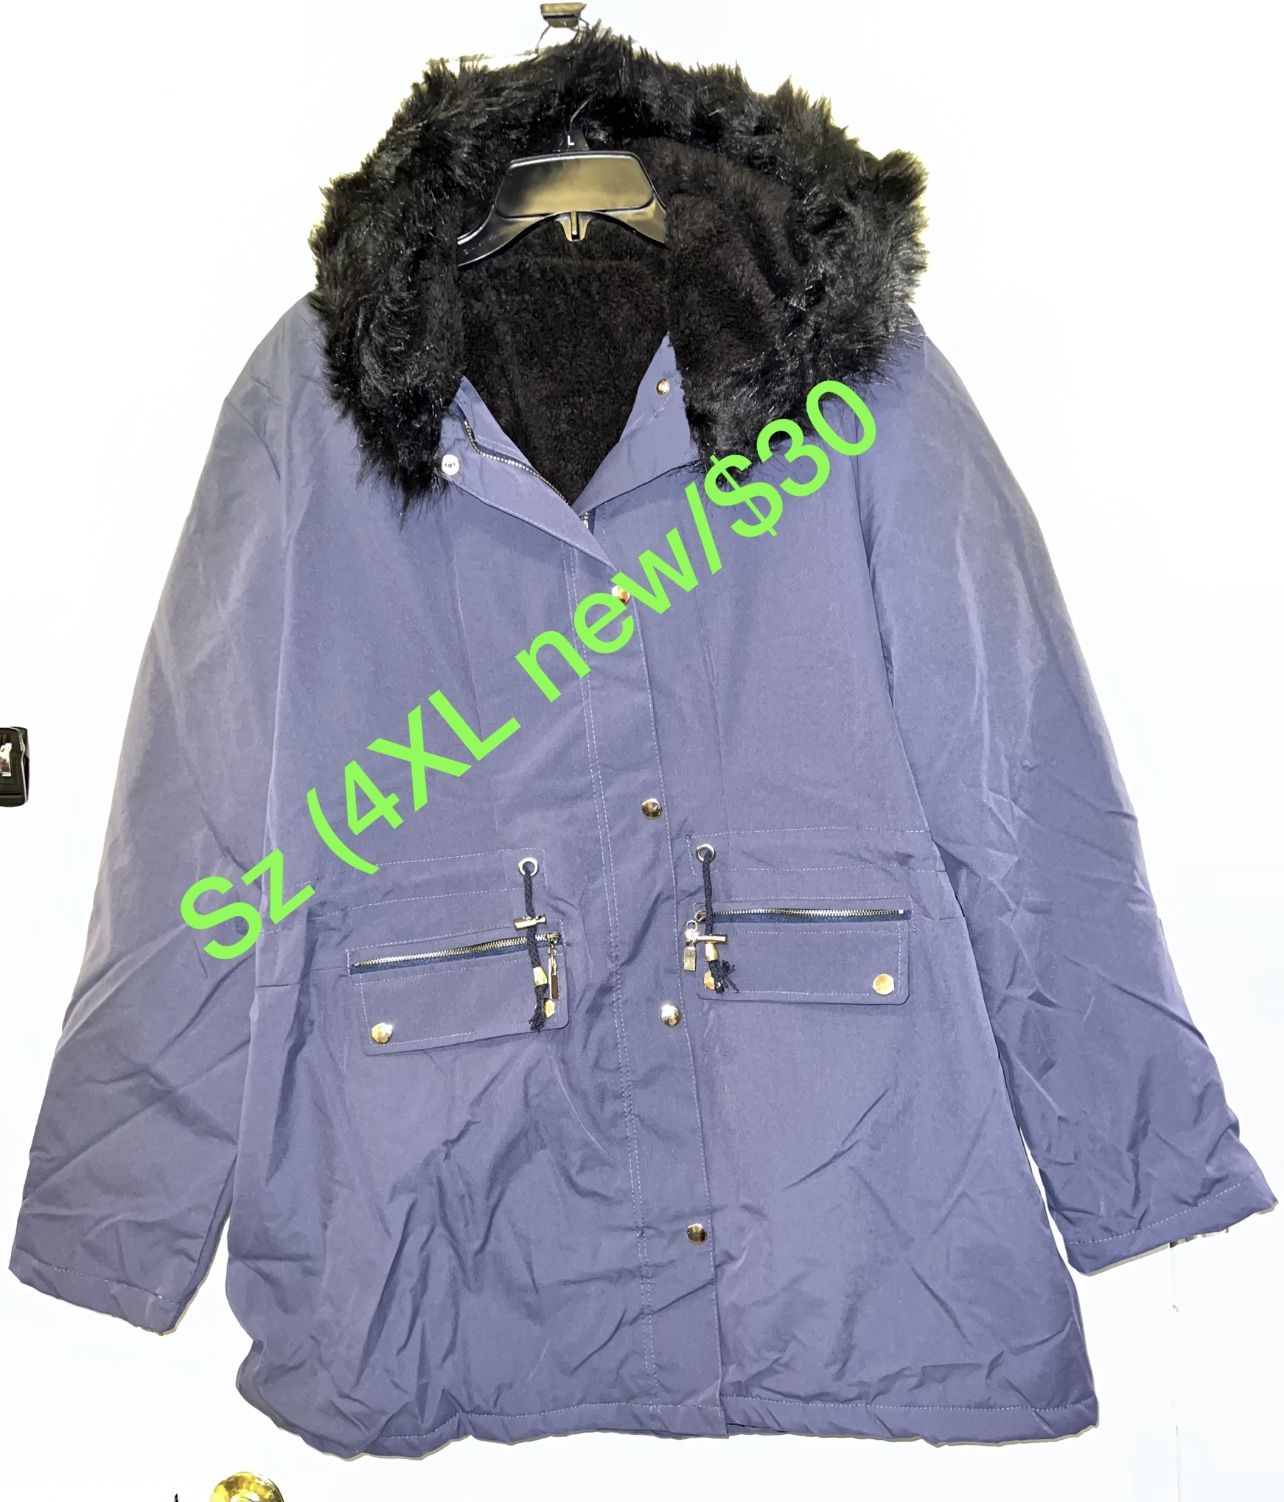 Very nice jackets size (4xl) like (XXL)🧥 new only $30